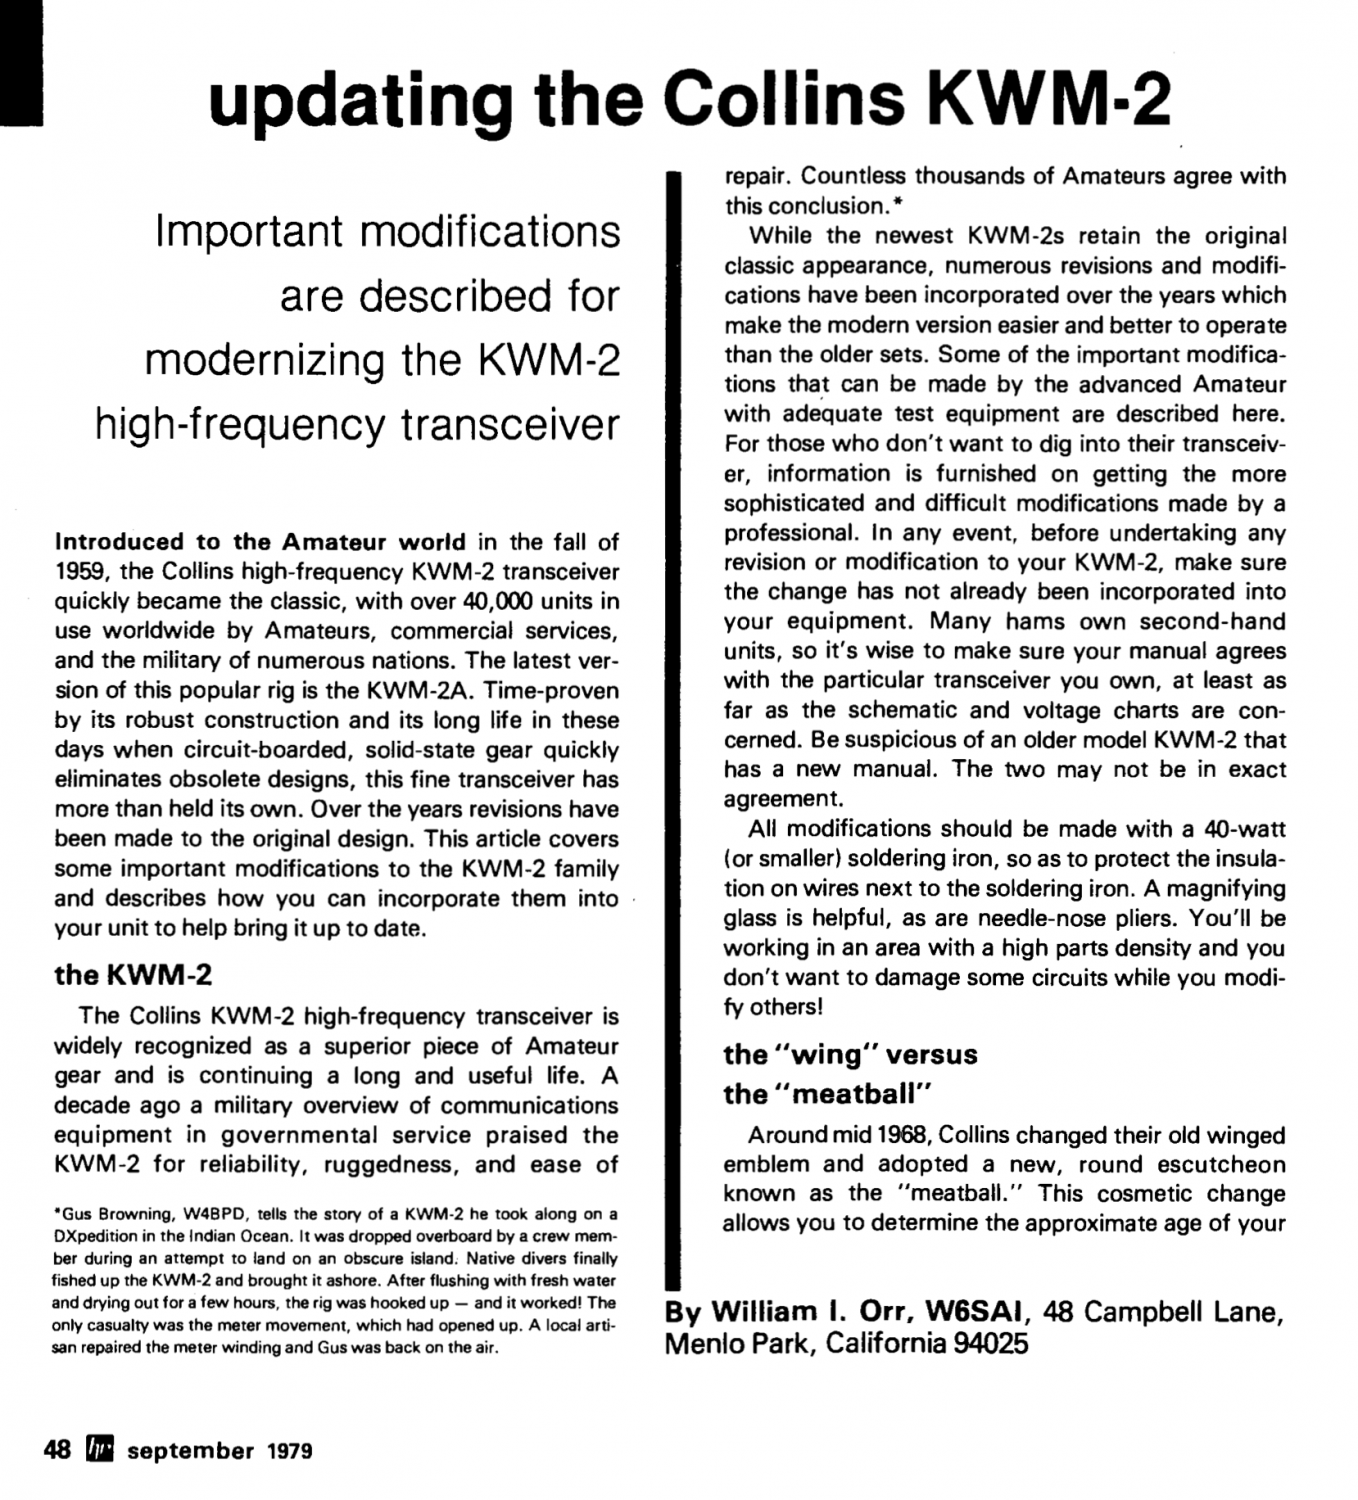 Collins KWM-2 Transceiver - Updating the Collins KWM-2 Article - Ham Radio Magazine (1979-09)